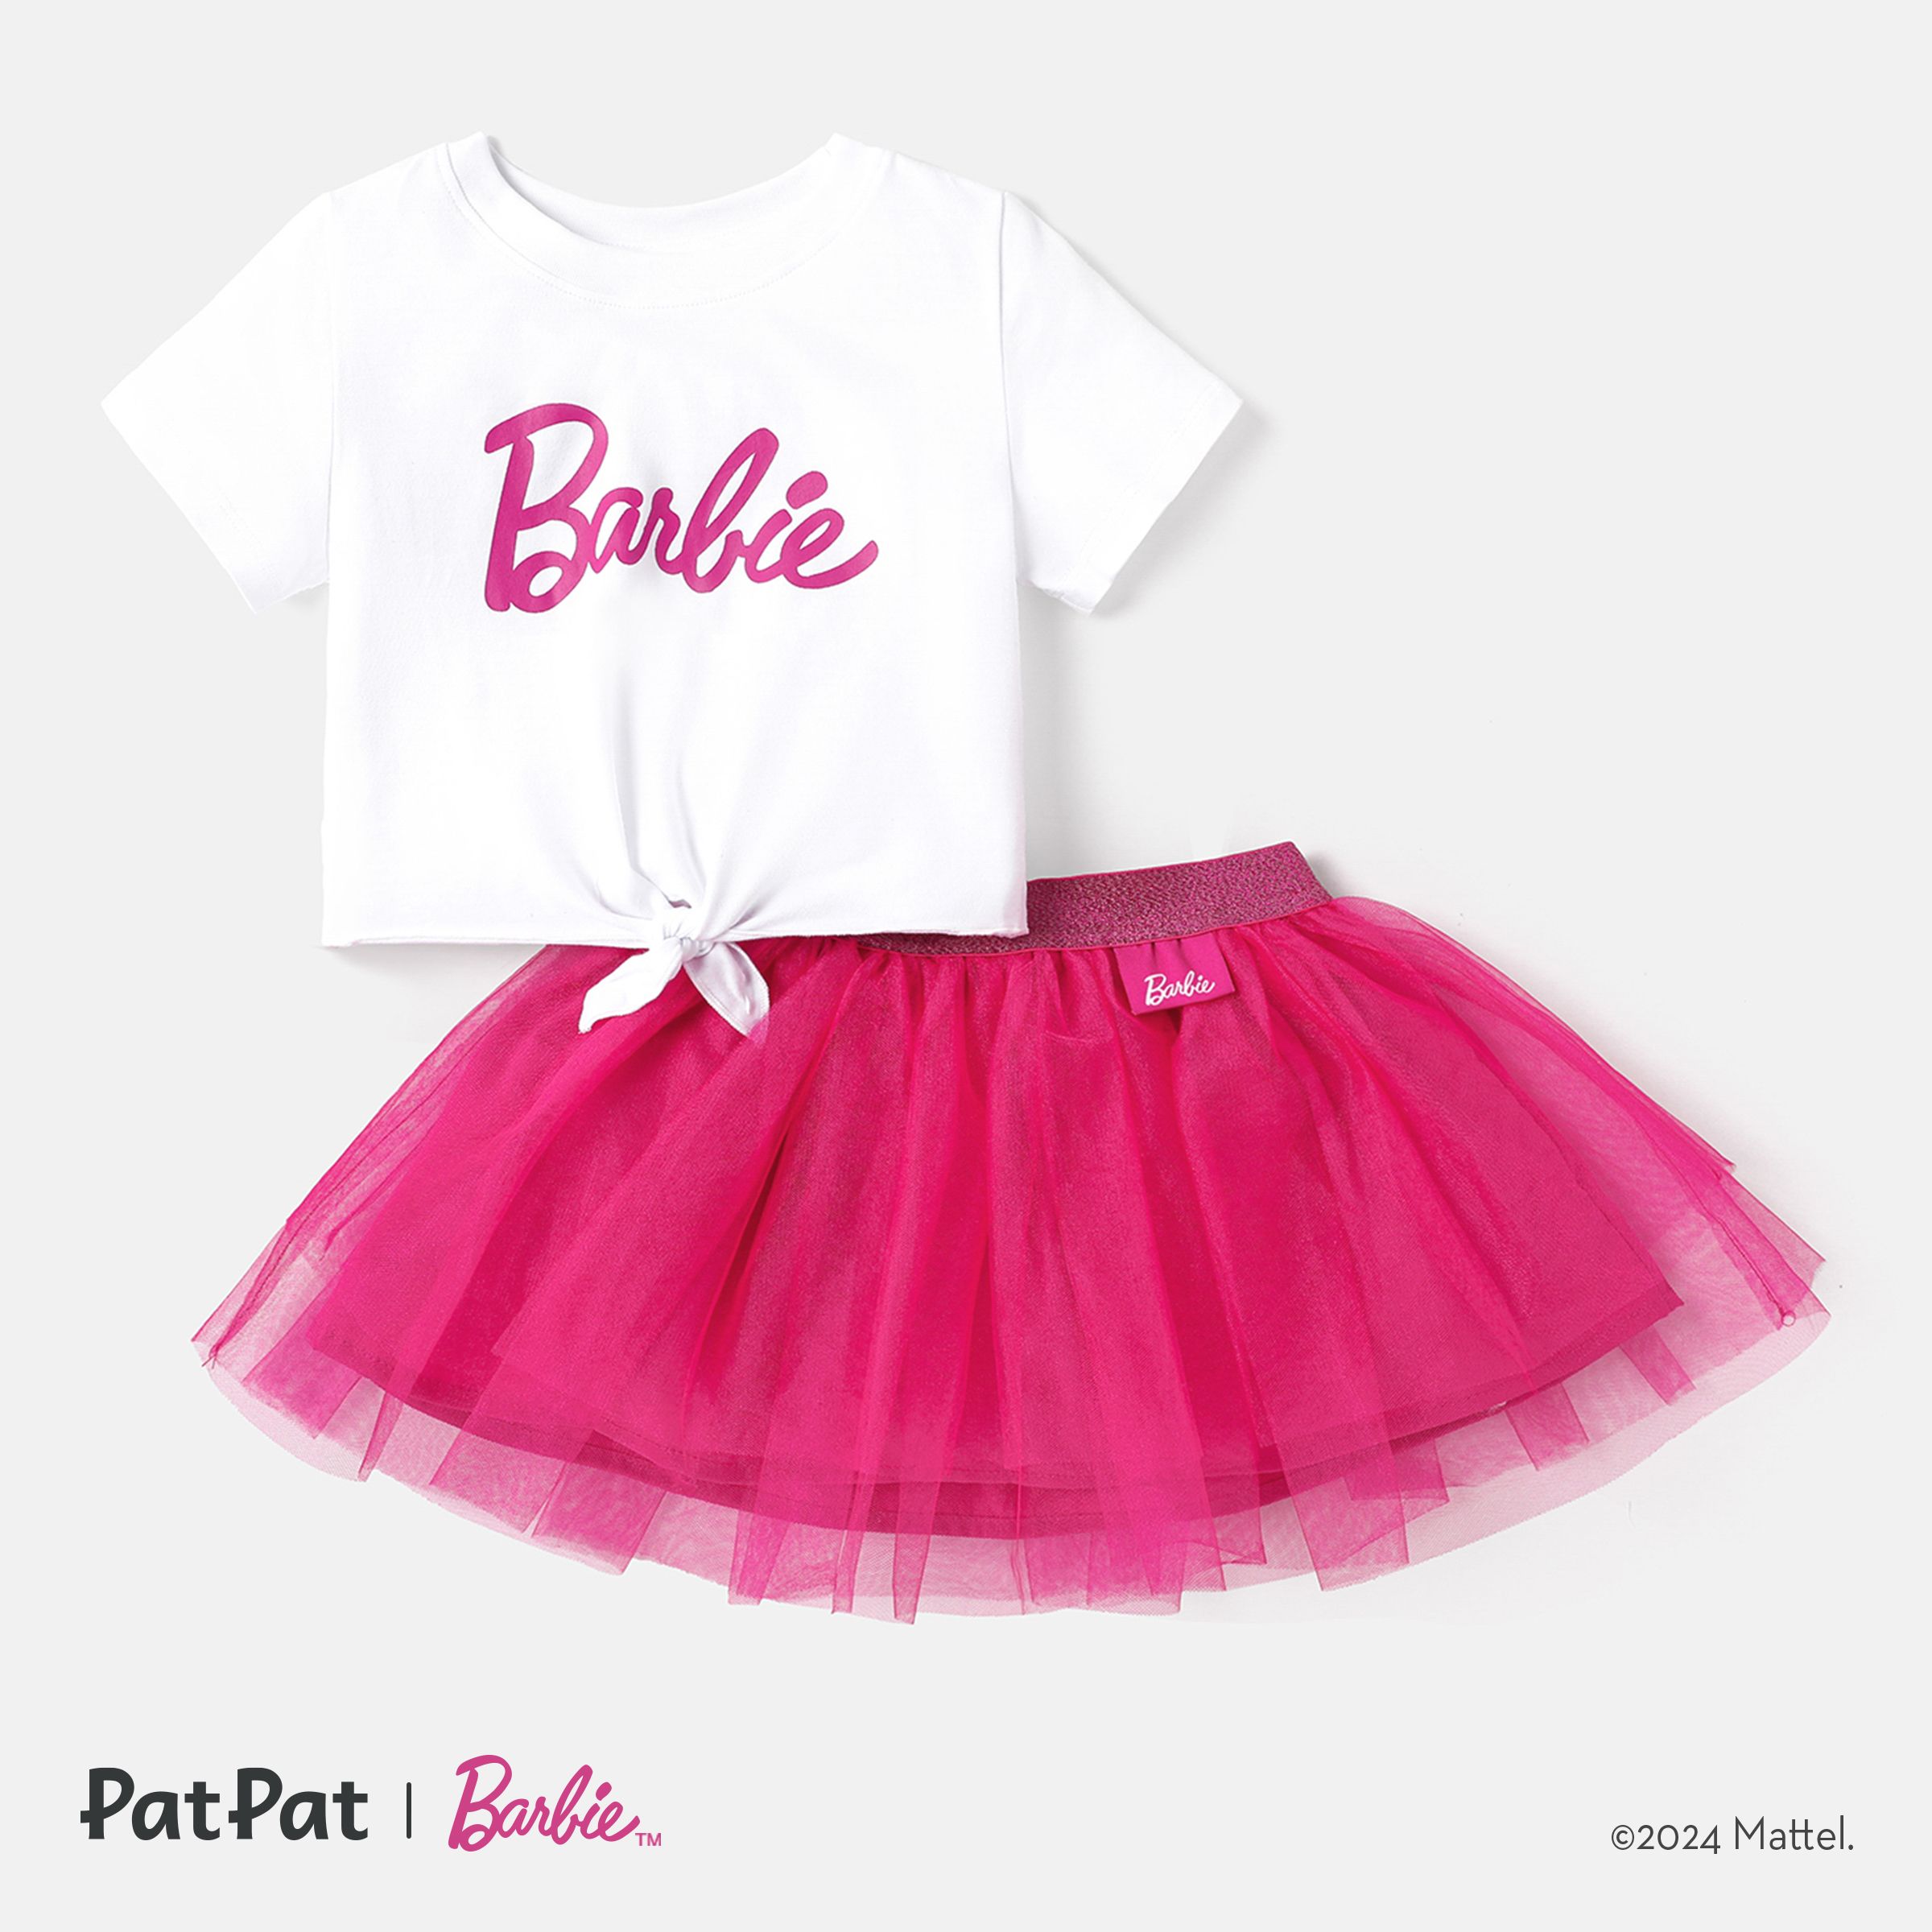 Barbie 2pcs Toddler Girl Tie Knot Cotton Tee and Mesh Skirt Set